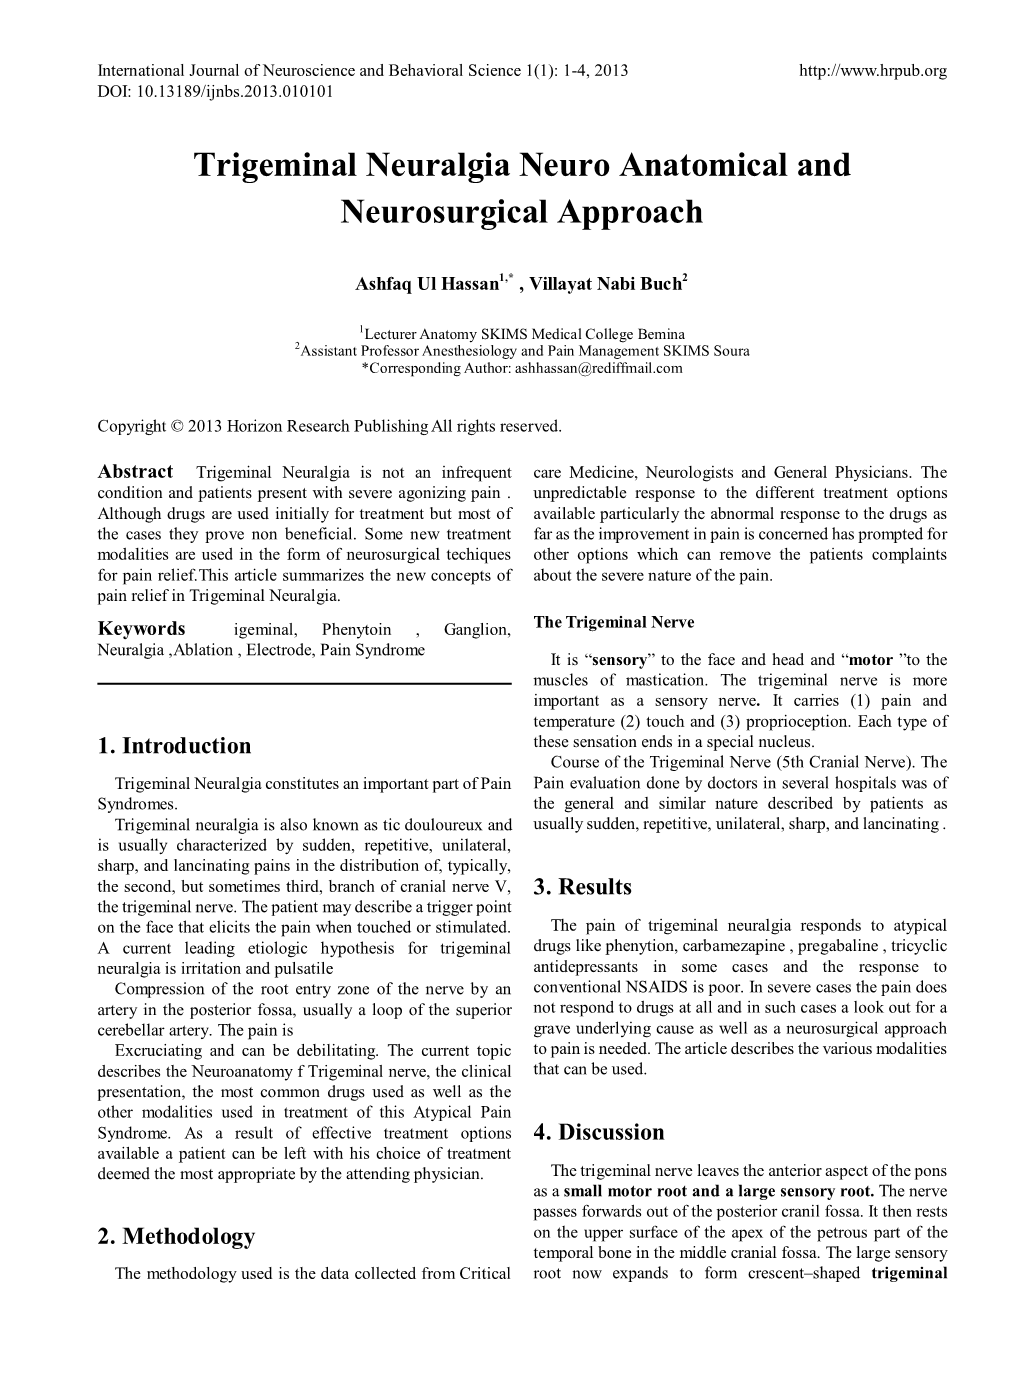 Trigeminal Neuralgia Neuro Anatomical and Neurosurgical Approach